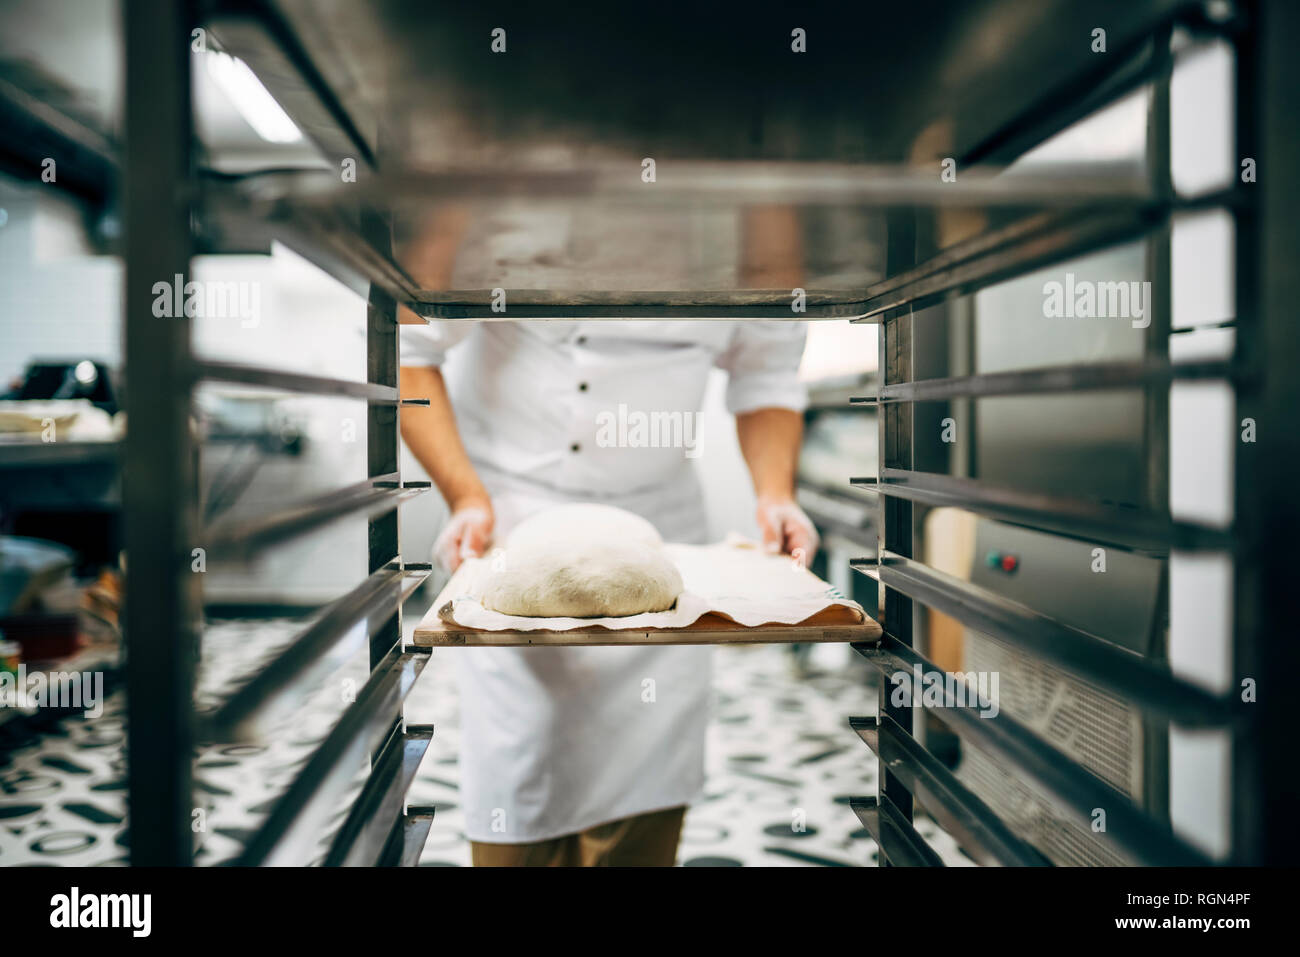 Baker working preparing tray to make bread Stock Photo